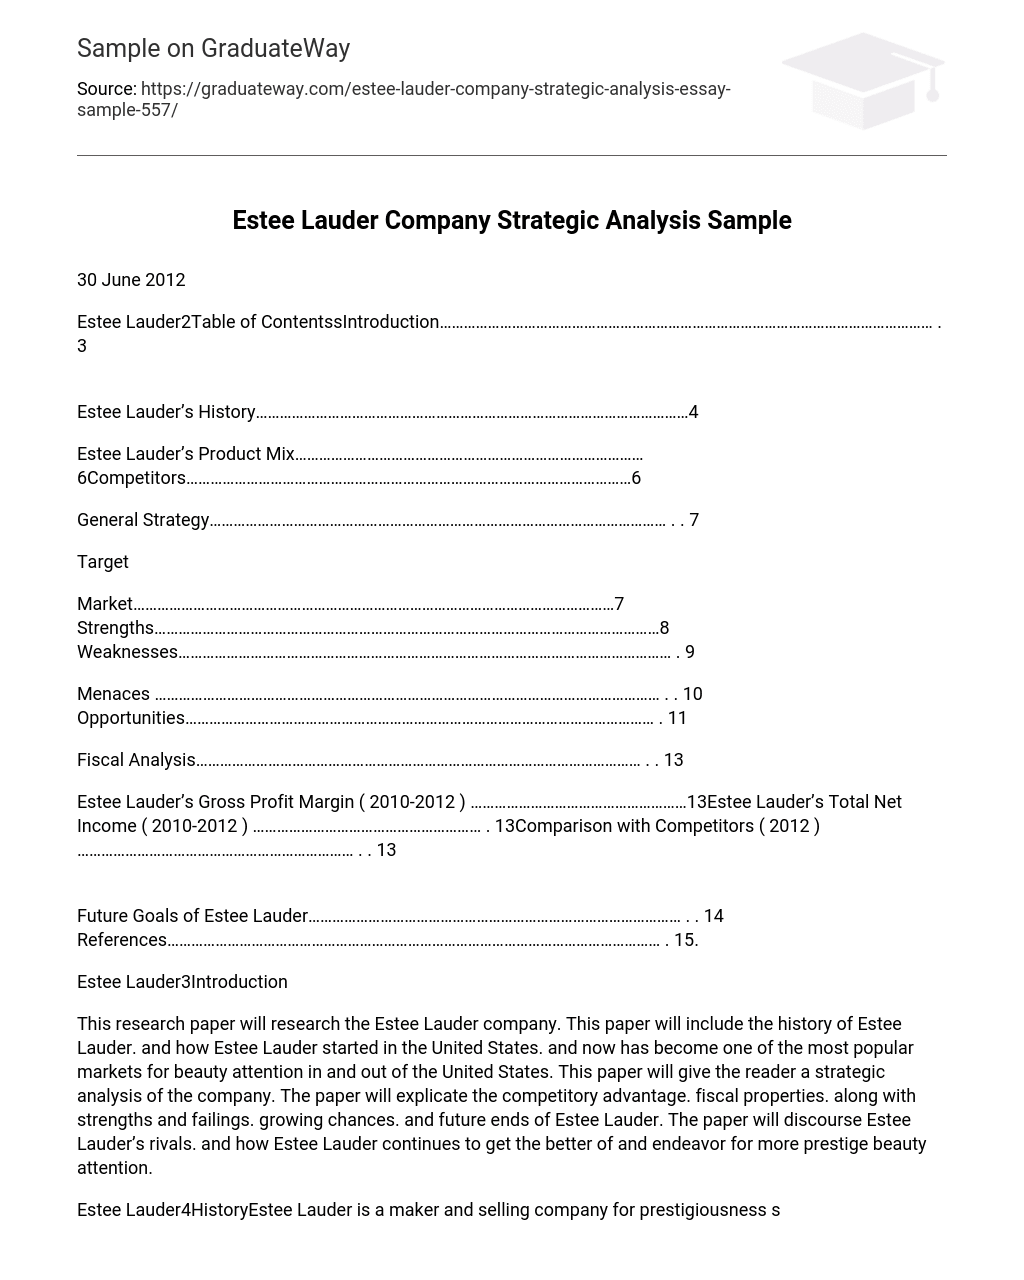 Estee Lauder Company Strategic Analysis Sample